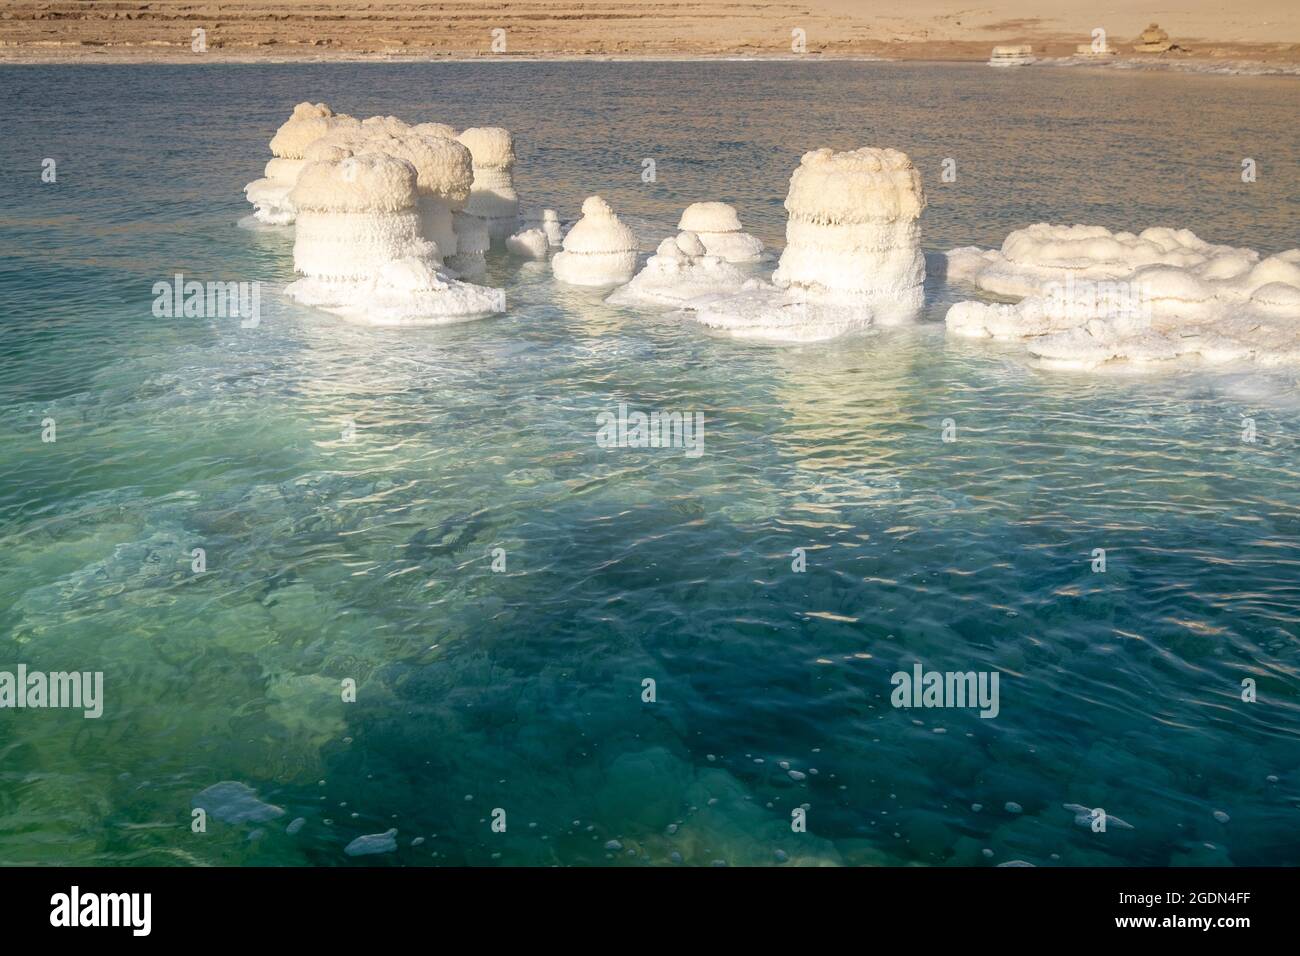 Crystallized slat rocks along the shores of the Dead Sea, Israel. Stock Photo